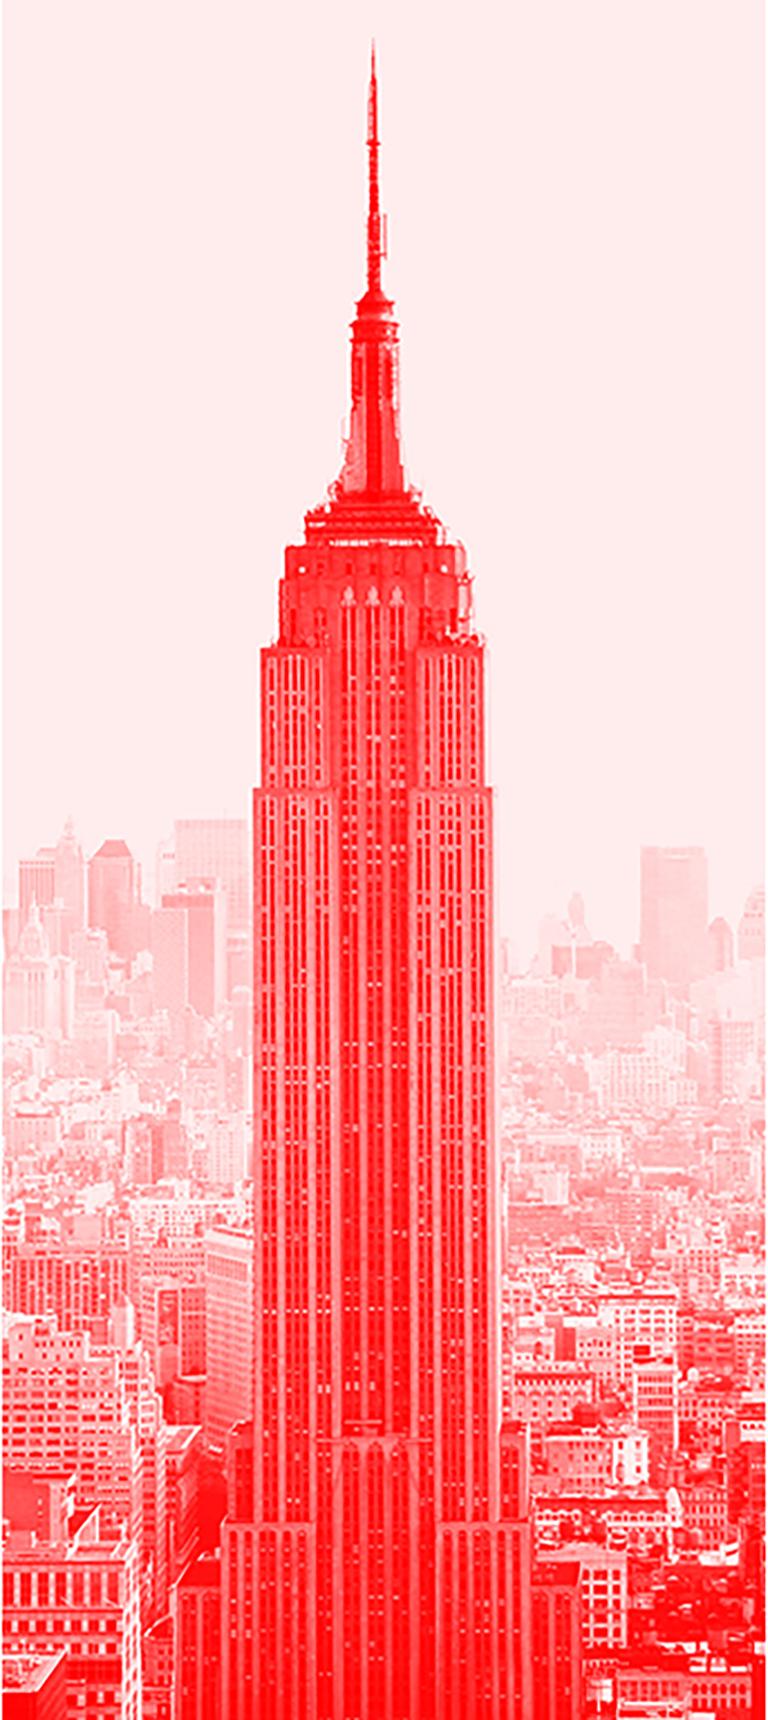 Claire Clarkson Color Photograph - "Red Empire" Empire State Building Photograph Art Deco  